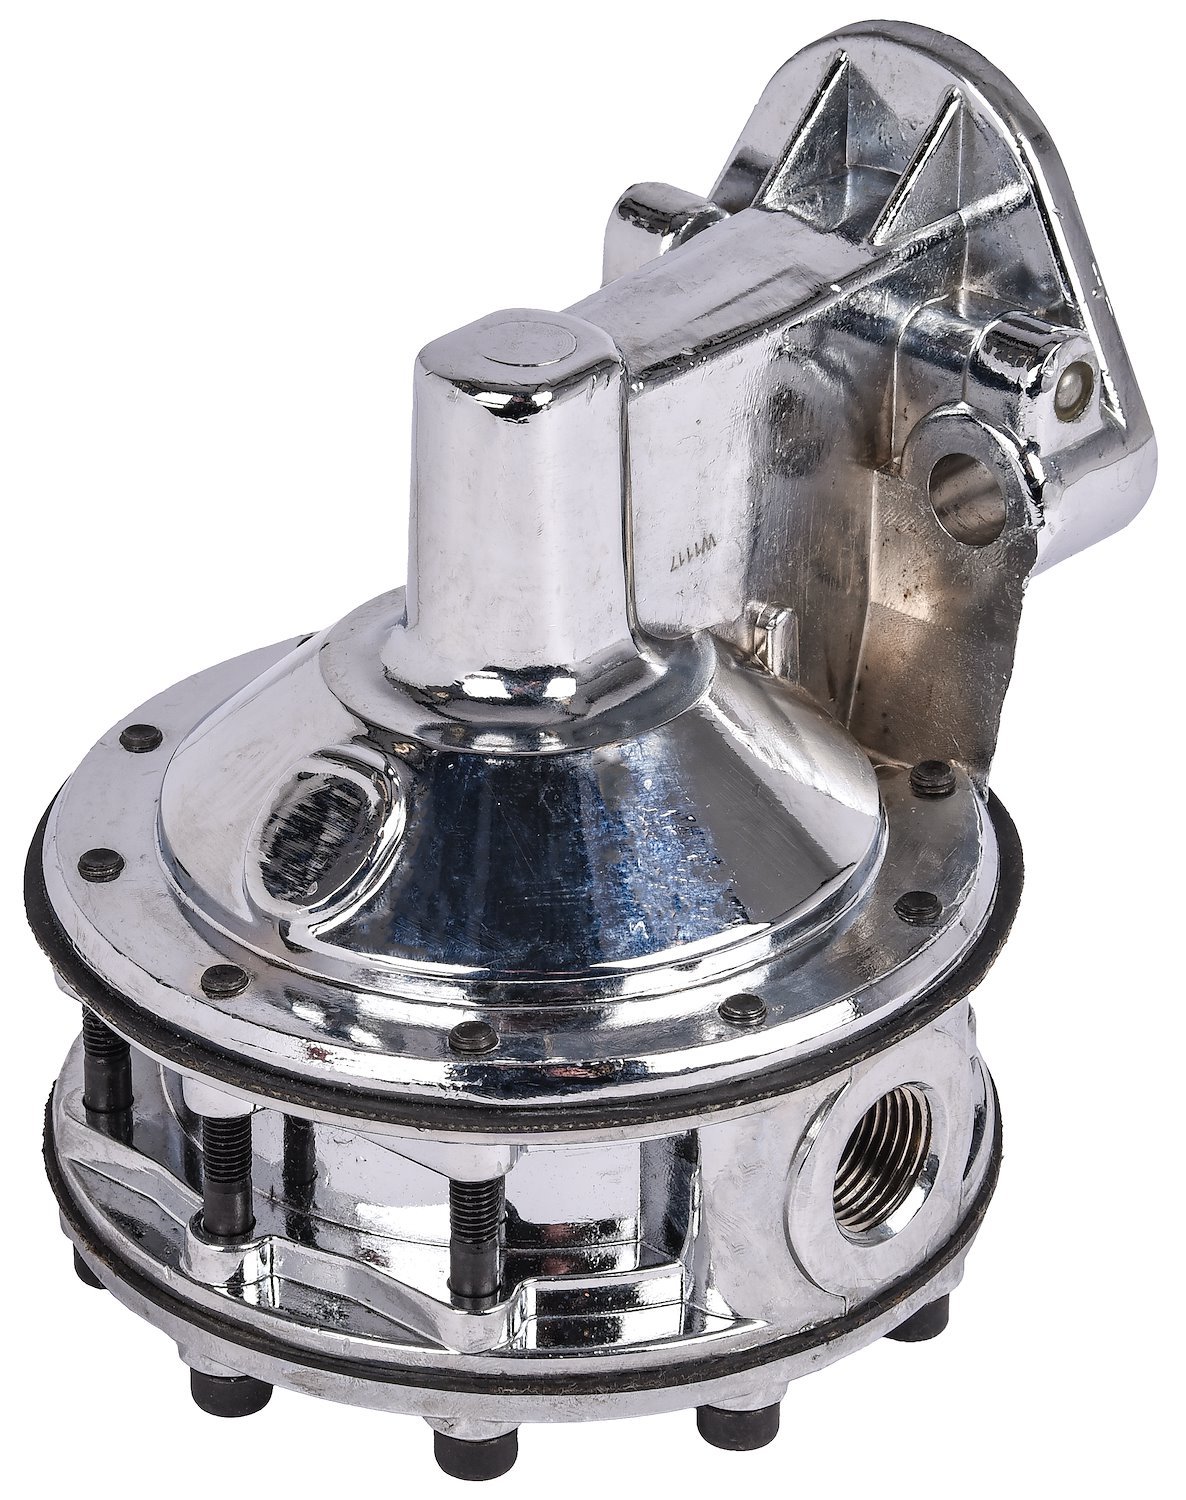 15968 - Mechanical Fuel Pump for Small Block Chevy 265-283-327-350-400 [110 gph, Chrome]